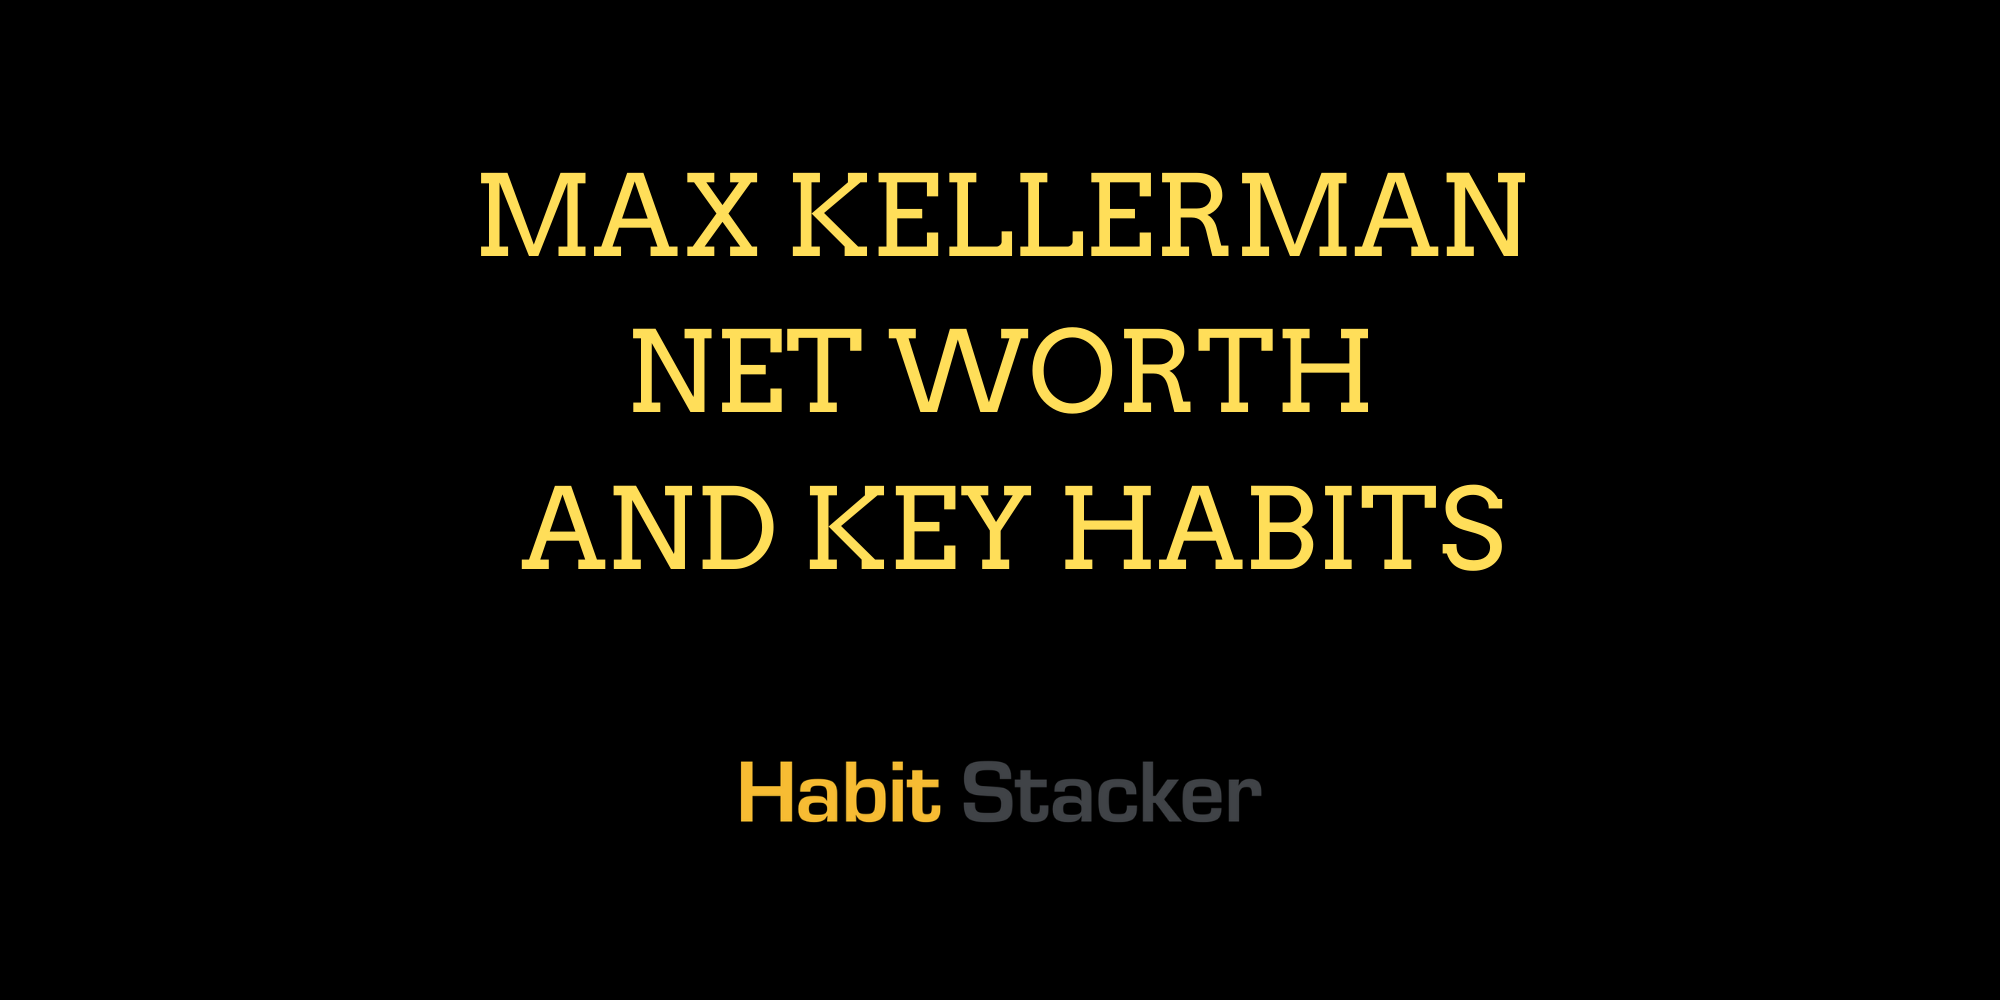 Max Kellerman Net Worth And Key Habits